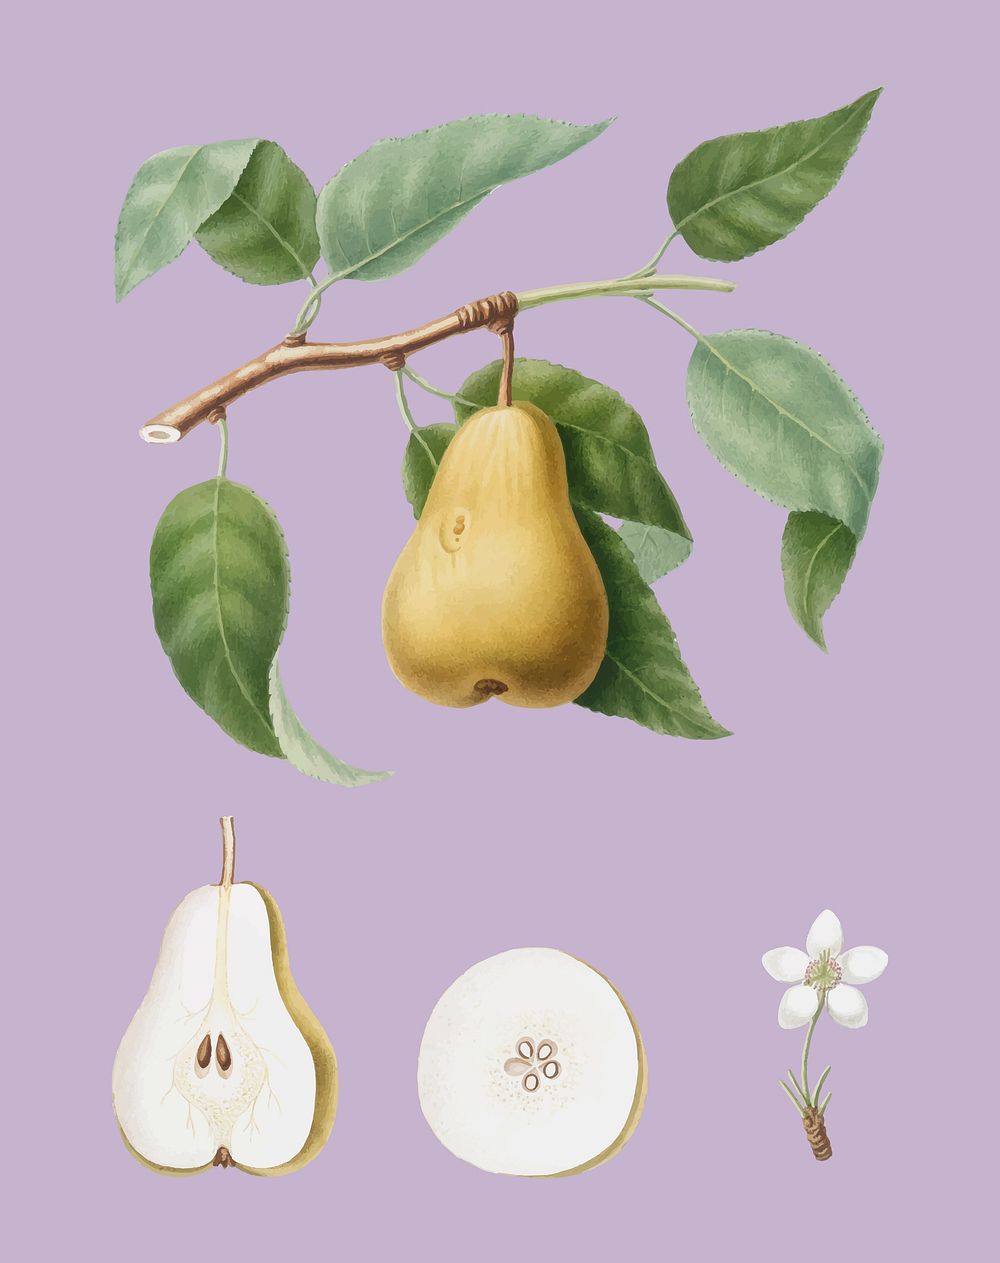 Pear from Pomona Italiana (1817-1839) by Giorgio Gallesio (1772-1839). Original from New York public library. Digitally…